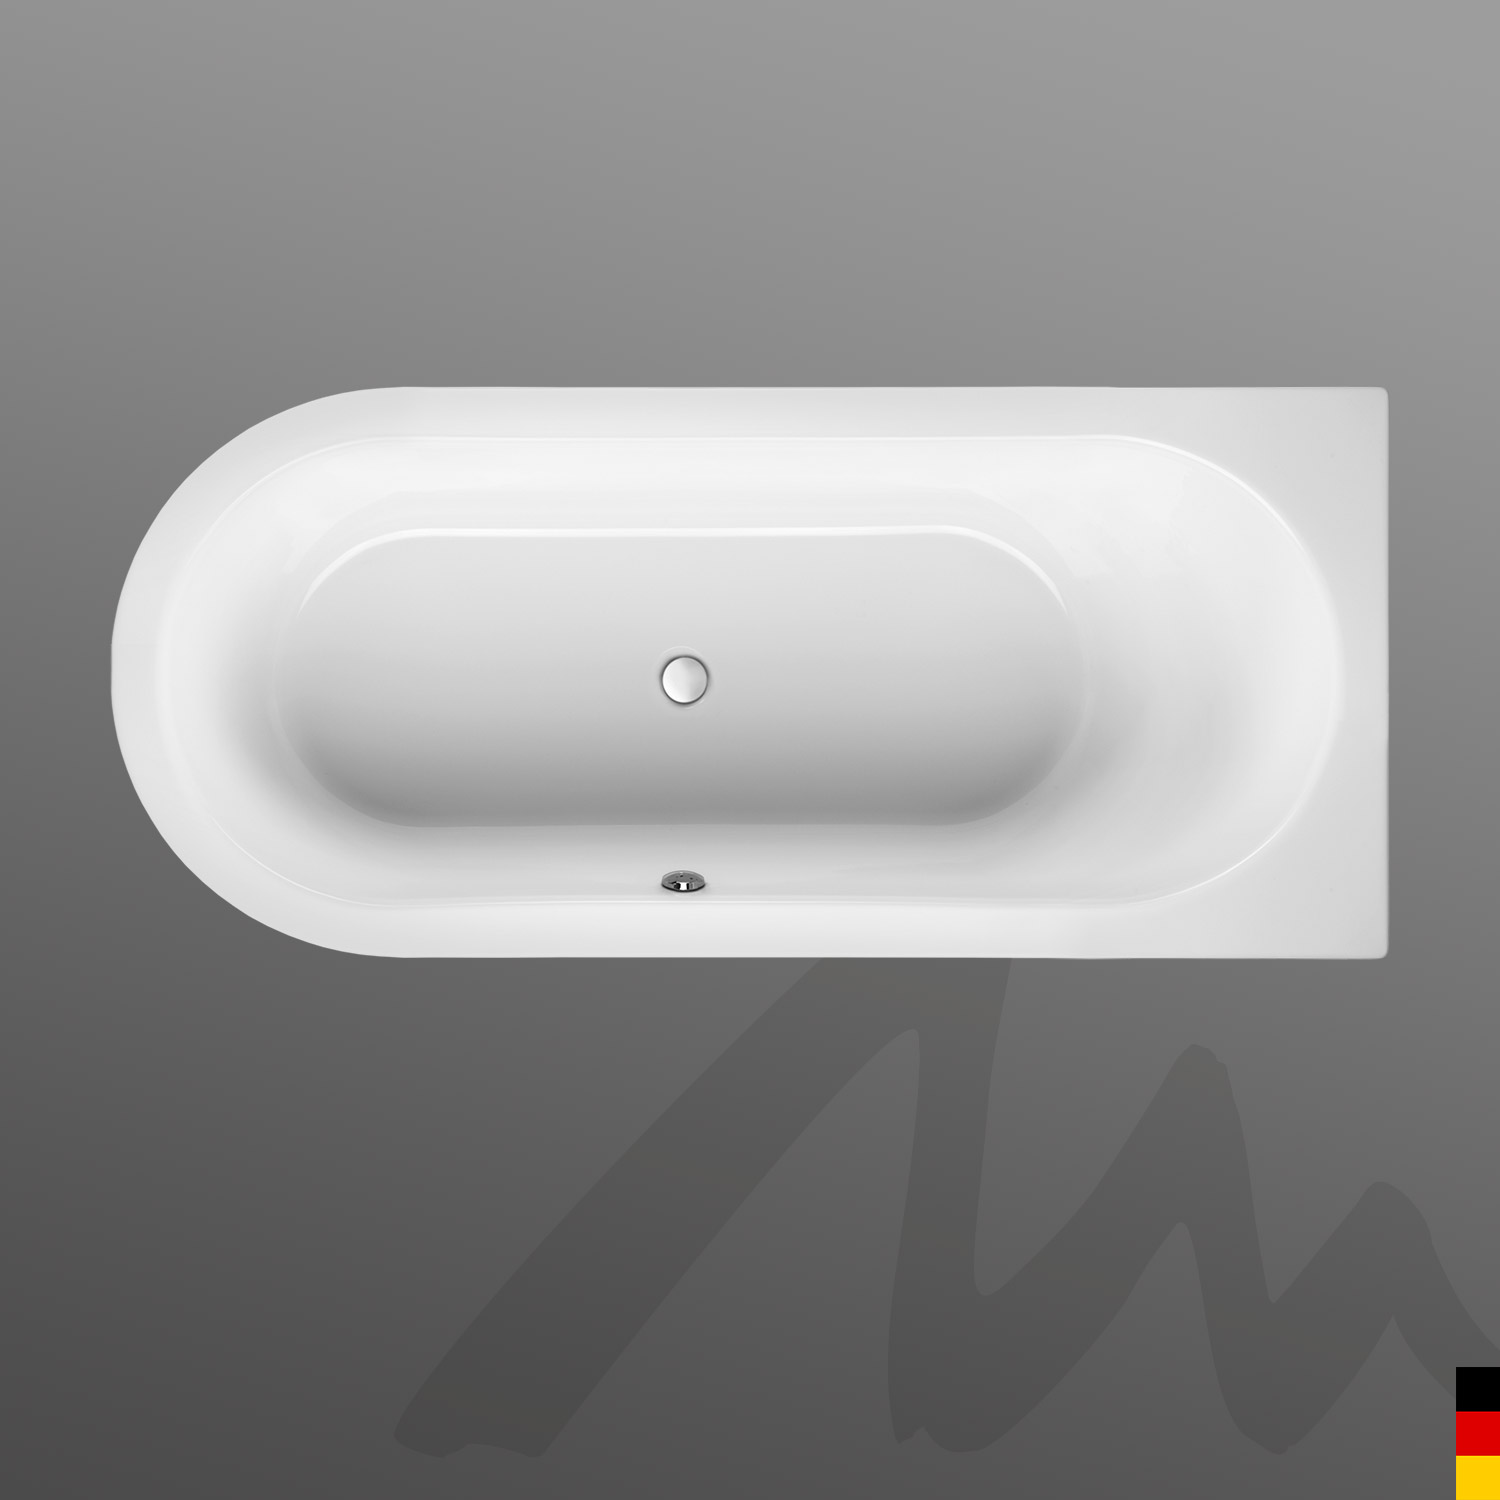 Mauersberger Badewanne Oval Primo 3 - 180/80 uno  180x80x45  Farbe:weiß